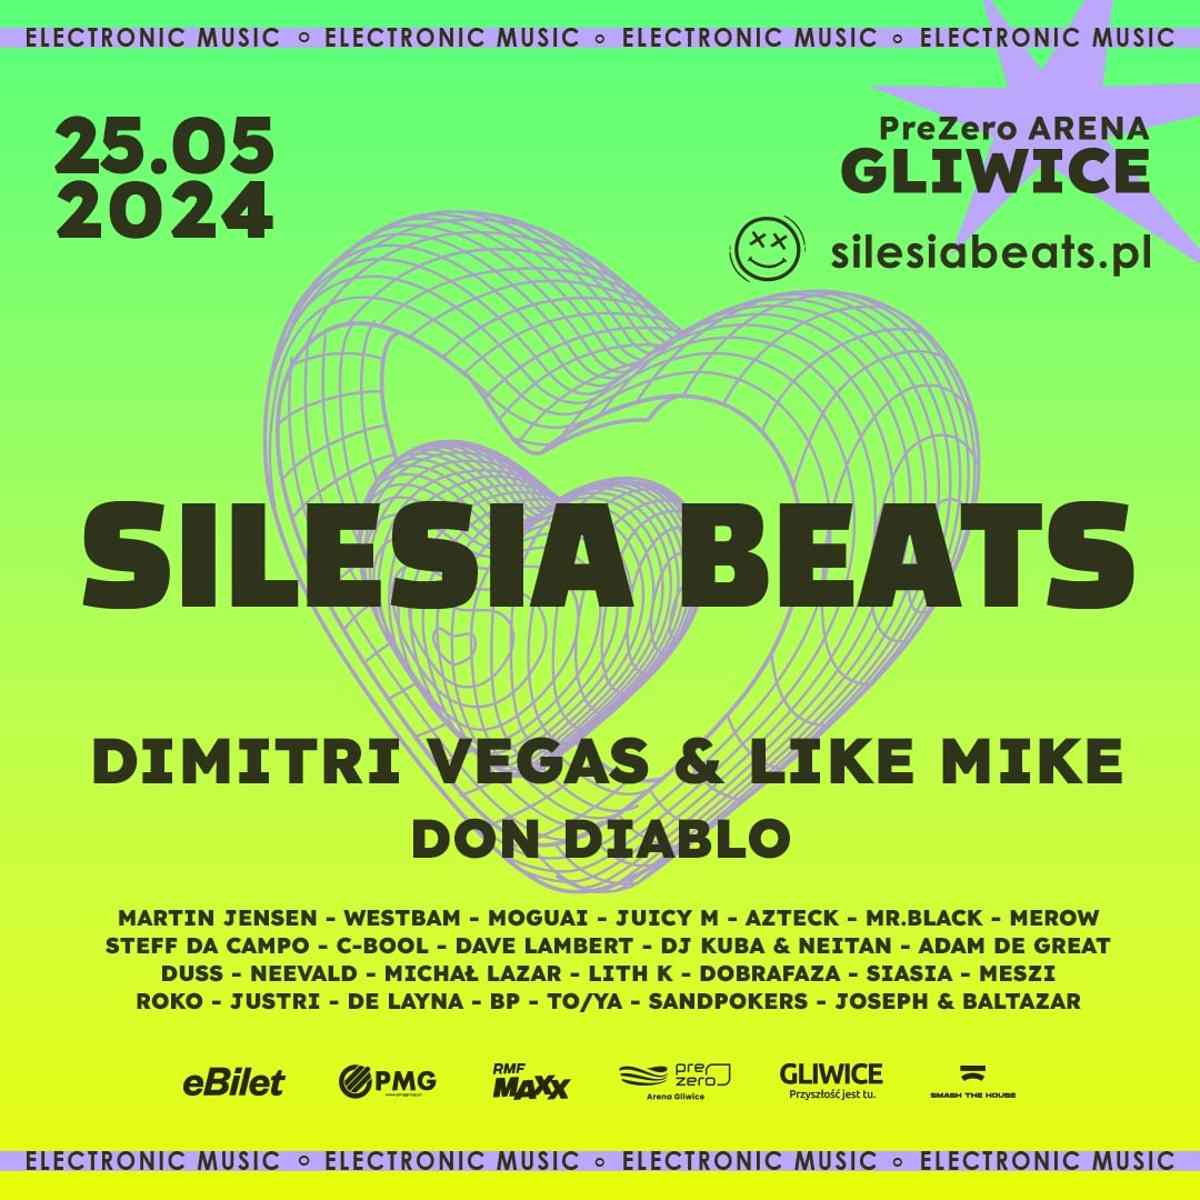 Silesia Beats Music Festival: A shared celebration of electronic music